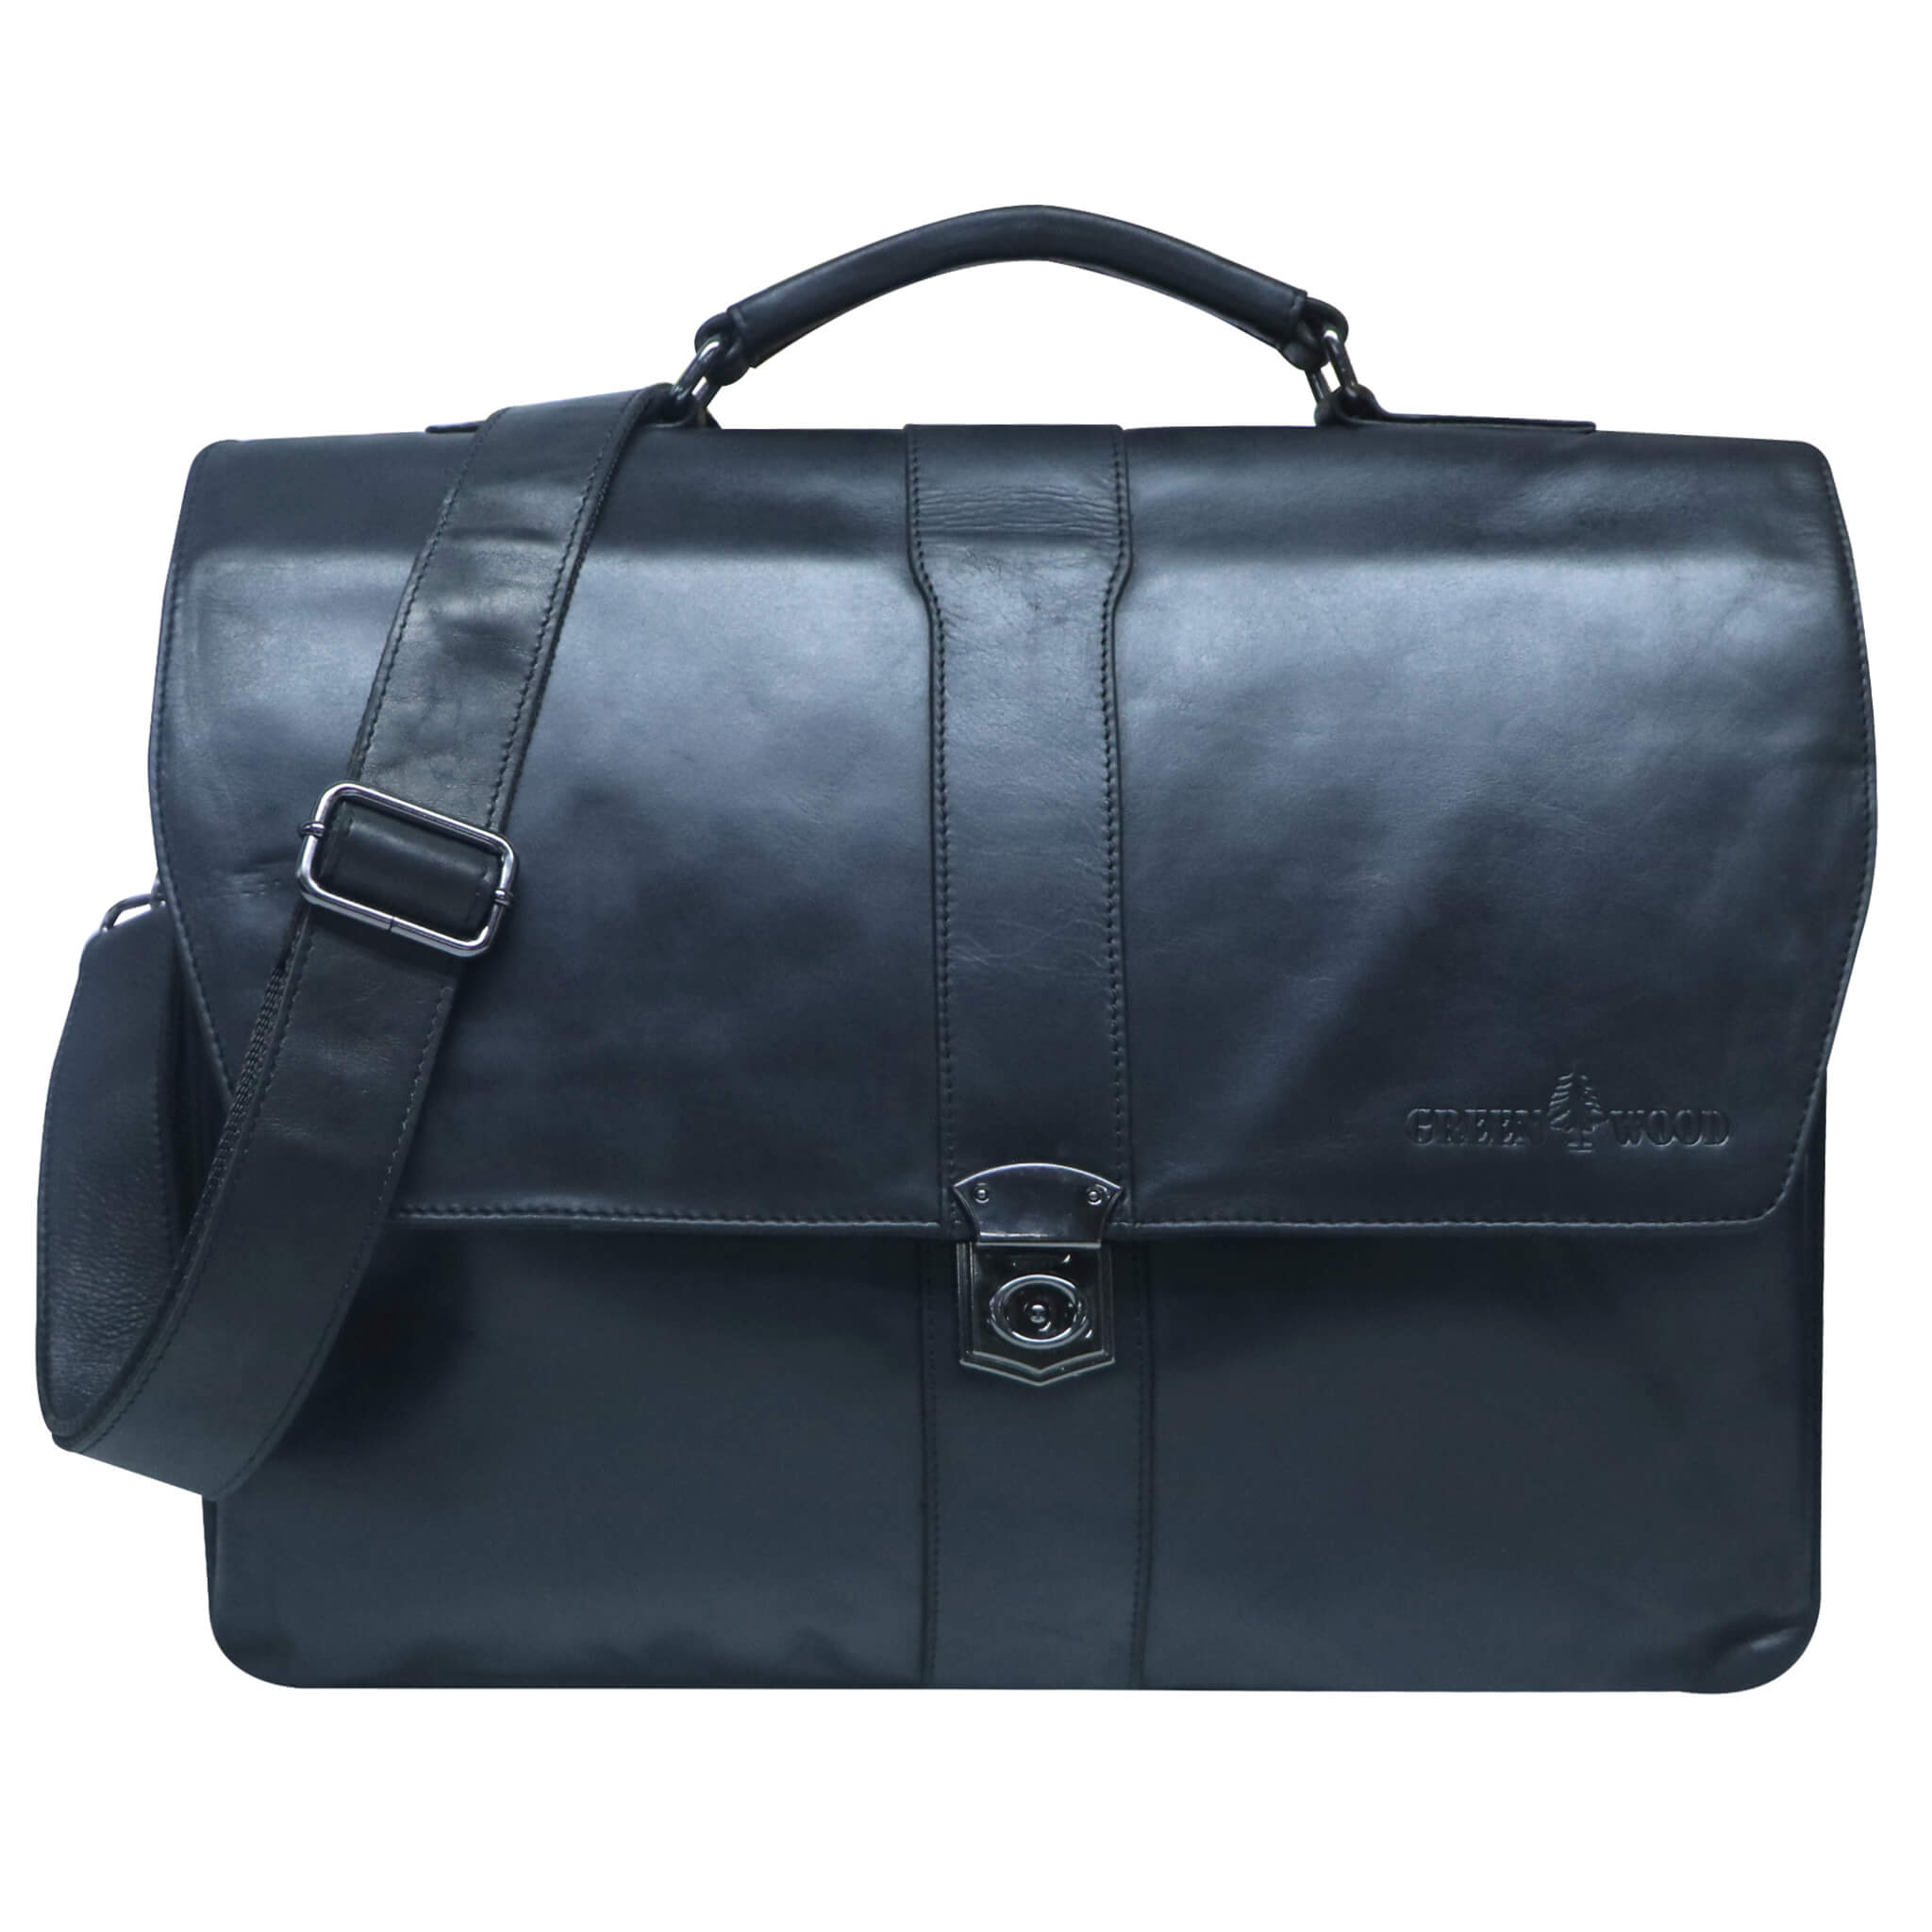 Hagen Leather Briefcase Men Classic Work Bag Women Large